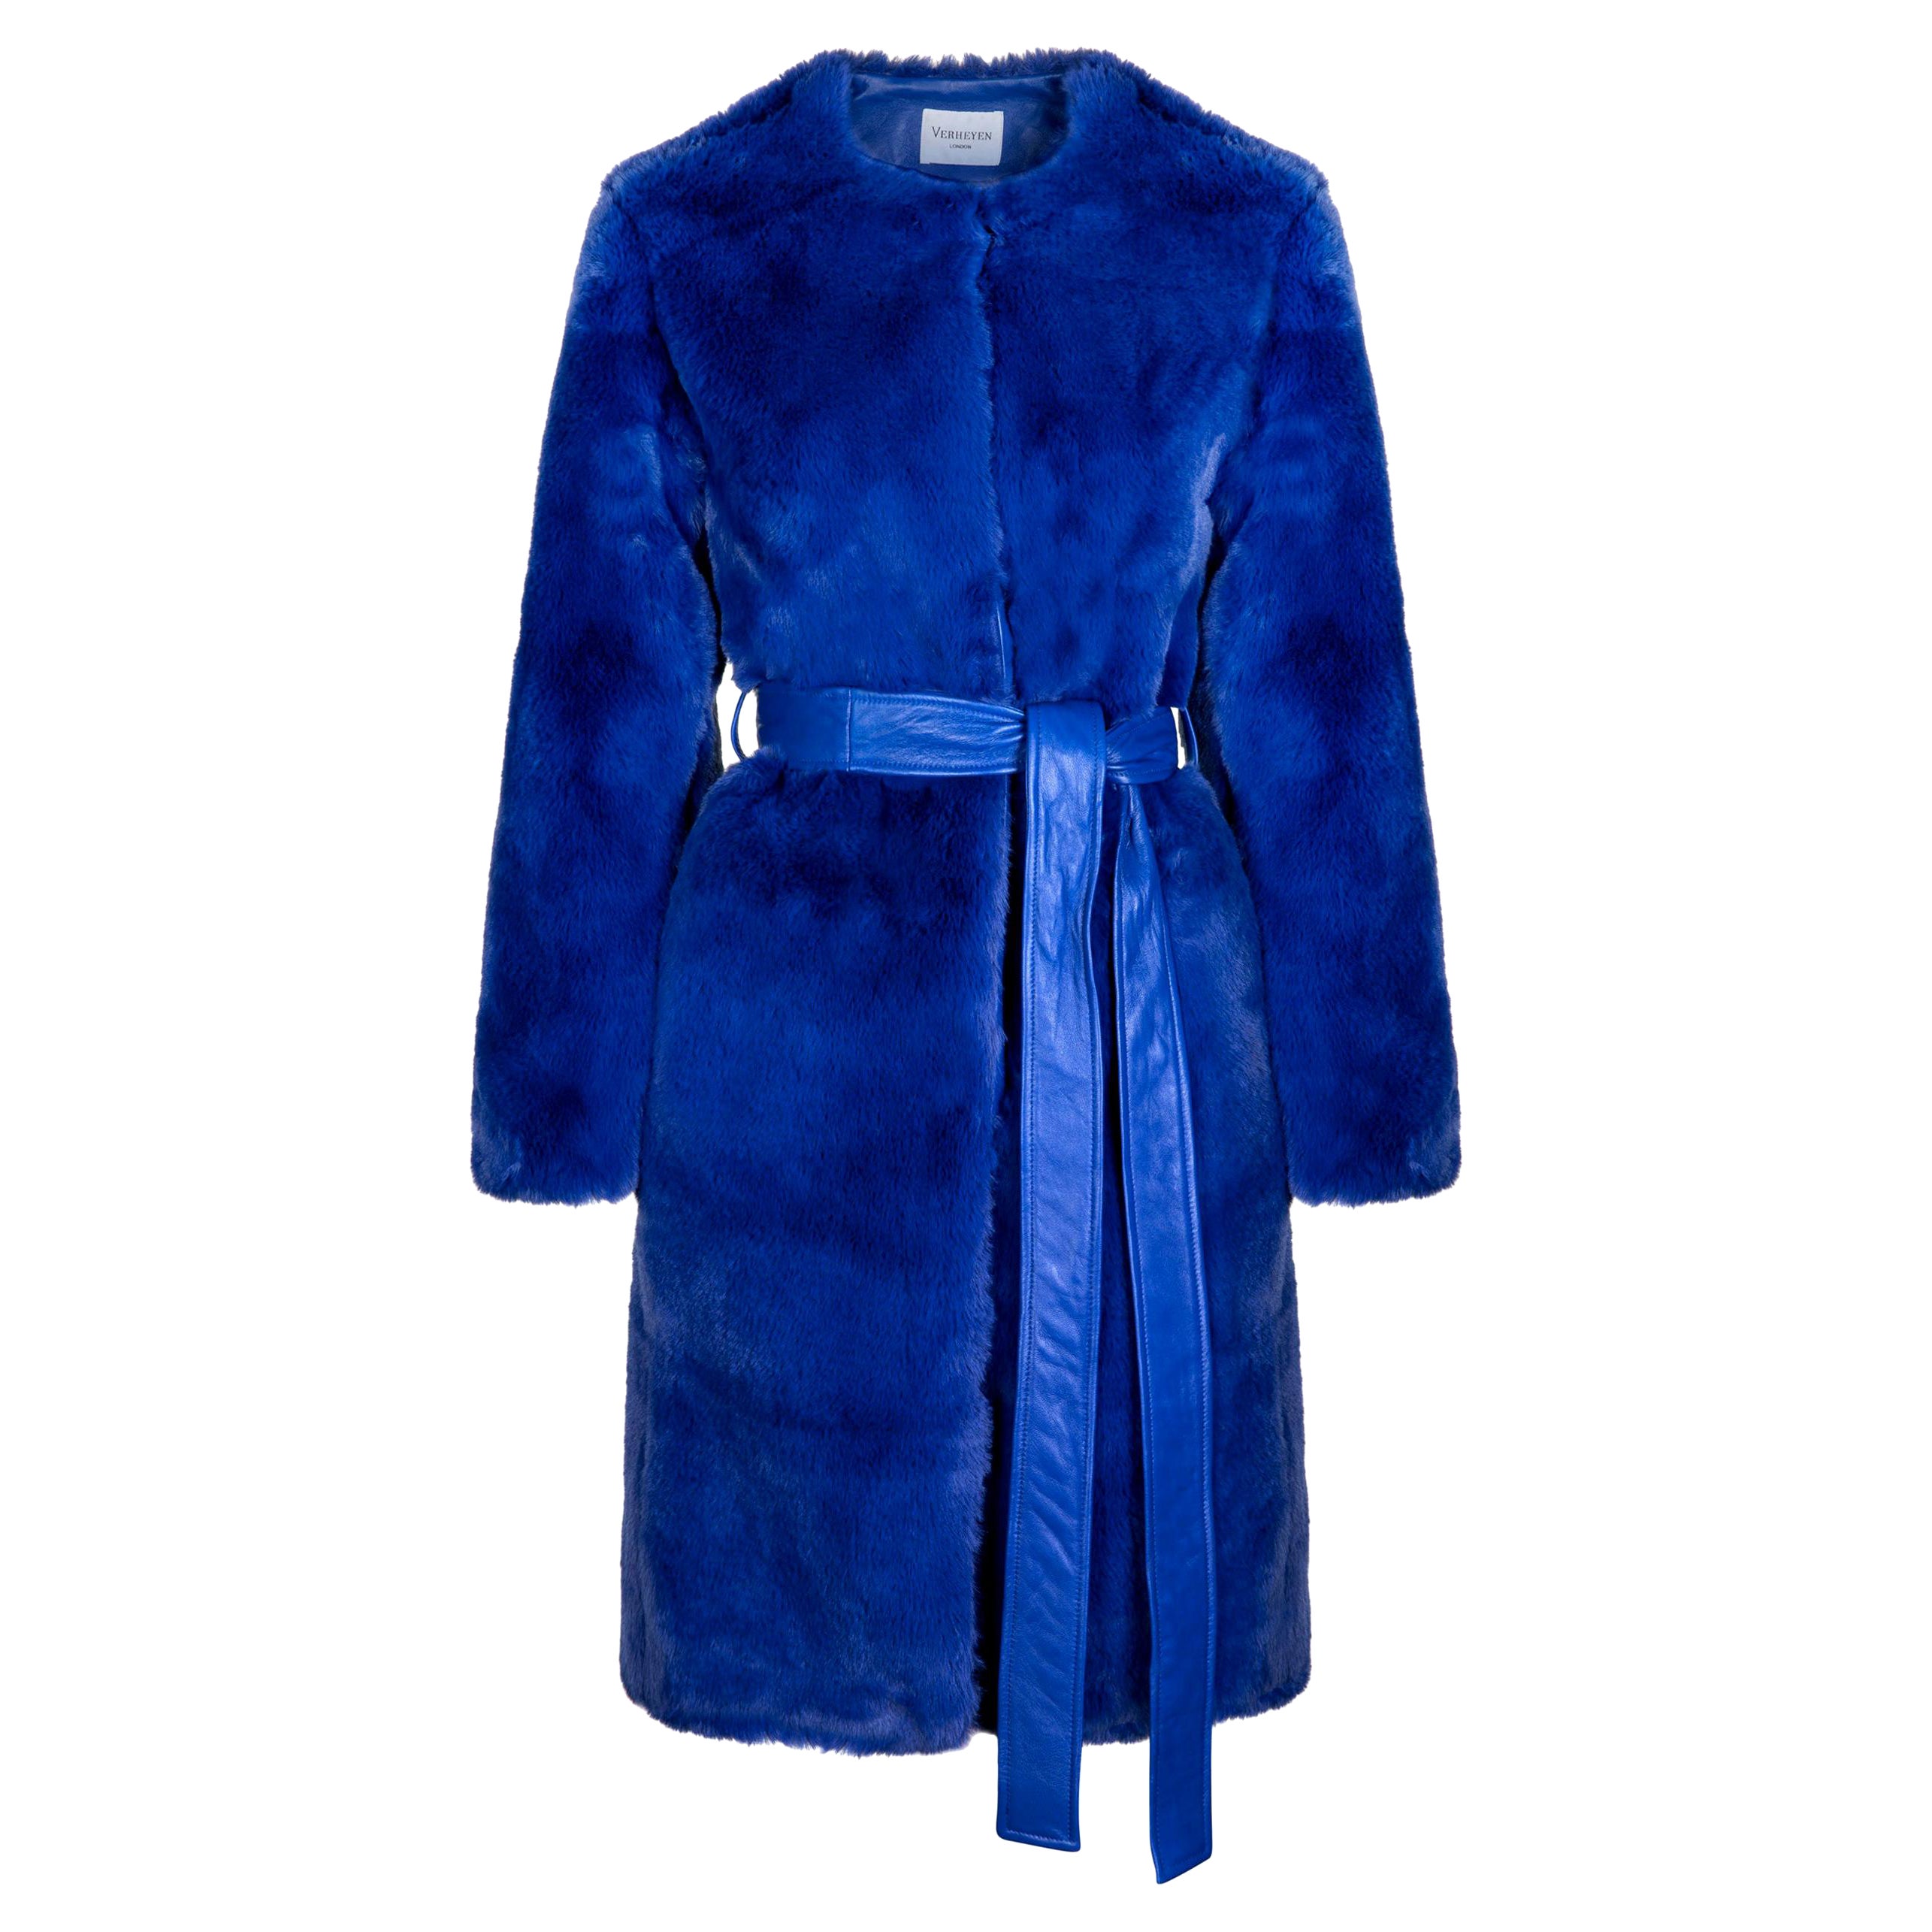 Verheyen London Serena  Collarless Faux Fur Coat in Blue - Size uk 8 